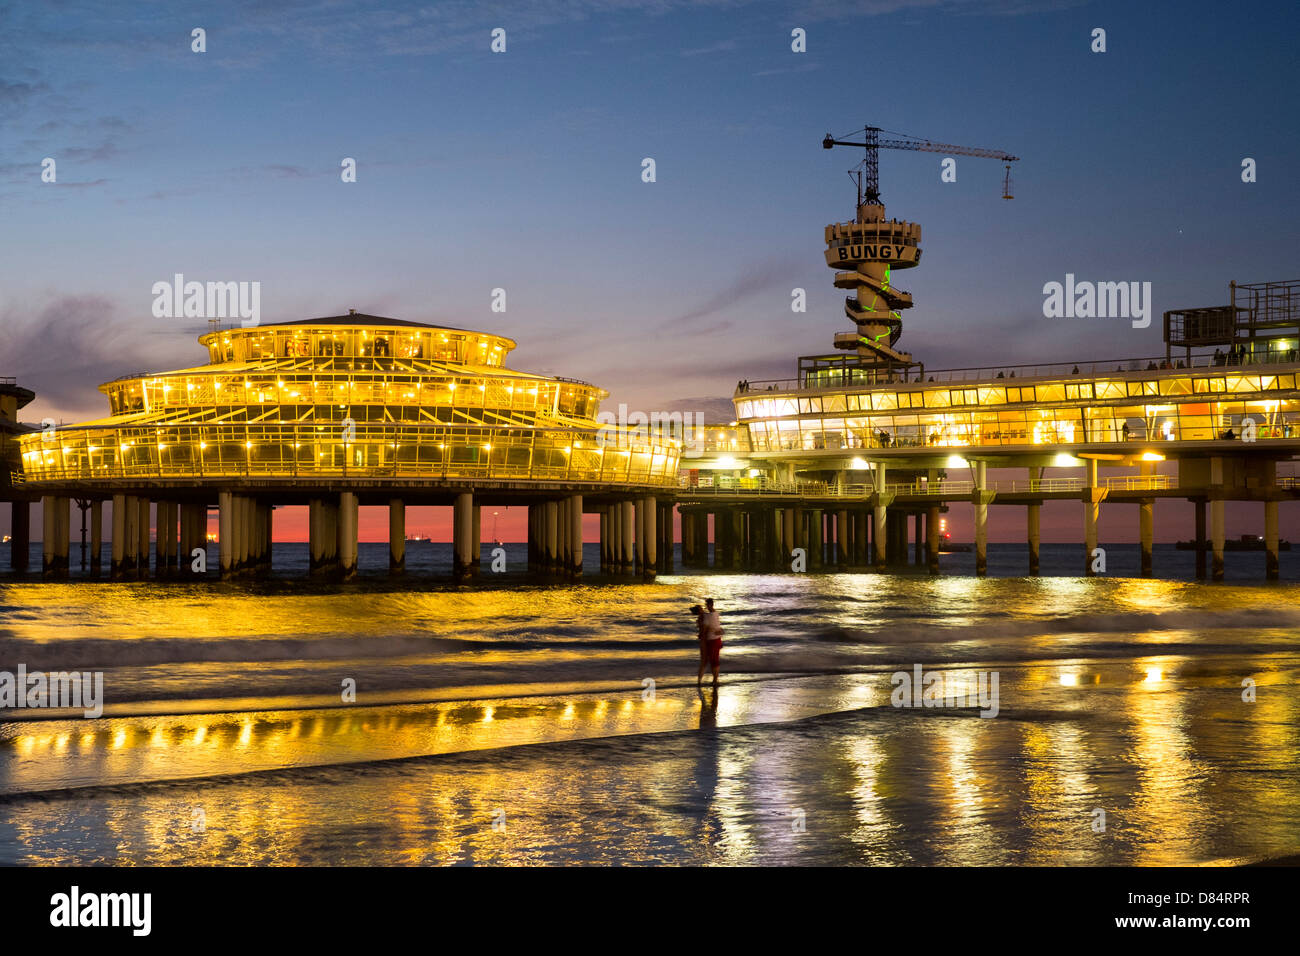 The pier in Scheveningen at night, The Hague, Netherlands Stock